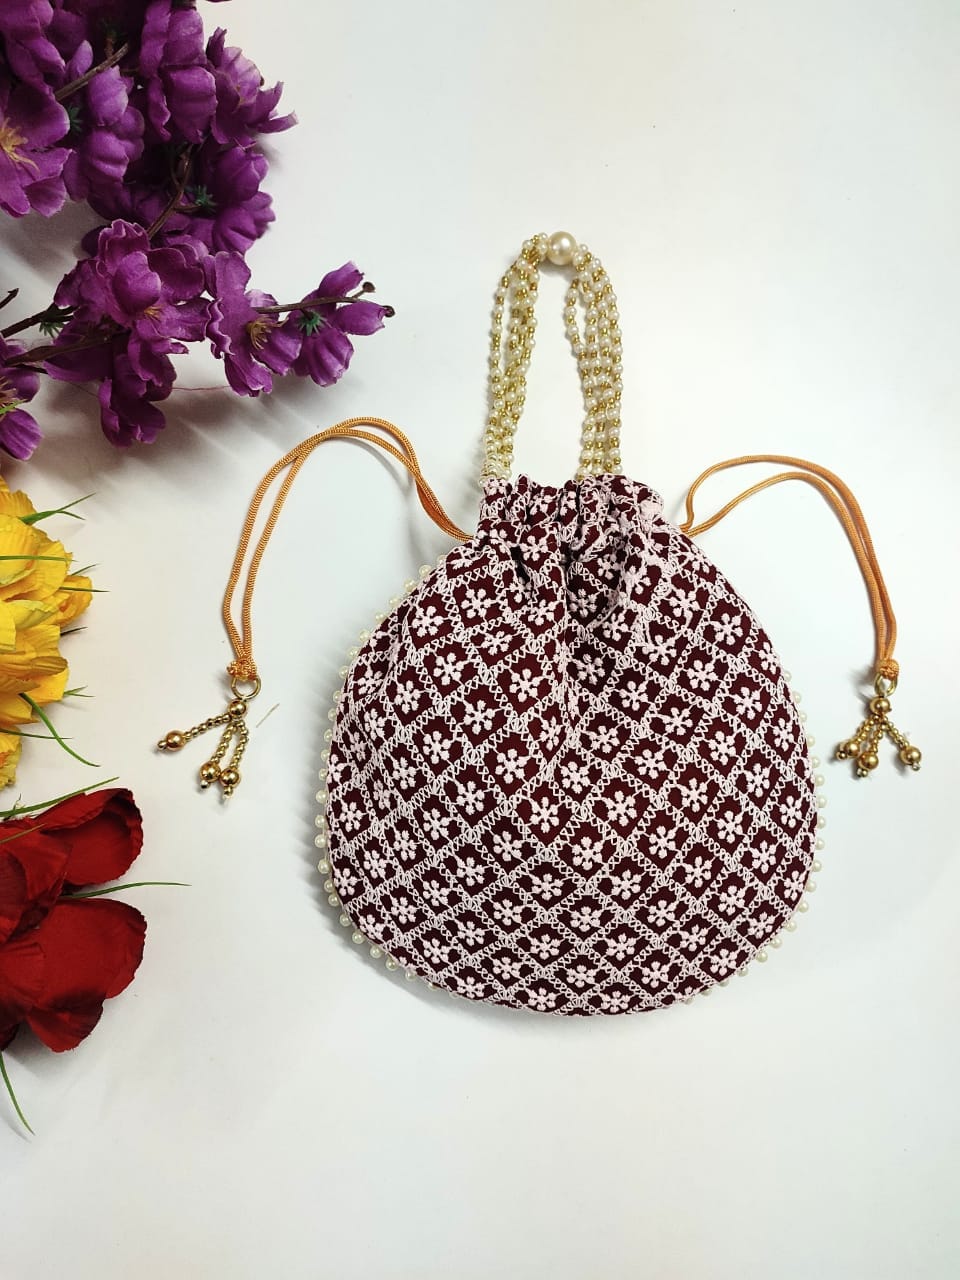 LAMANSH ® Women's Potli Bag Pack of 10 / Assorted Colour Patterns LAMANSH 10 Pcs Potli bags for women handbags traditional Indian Wristlet with Drawstring Ethnic Embroidery Women Fashion Potli